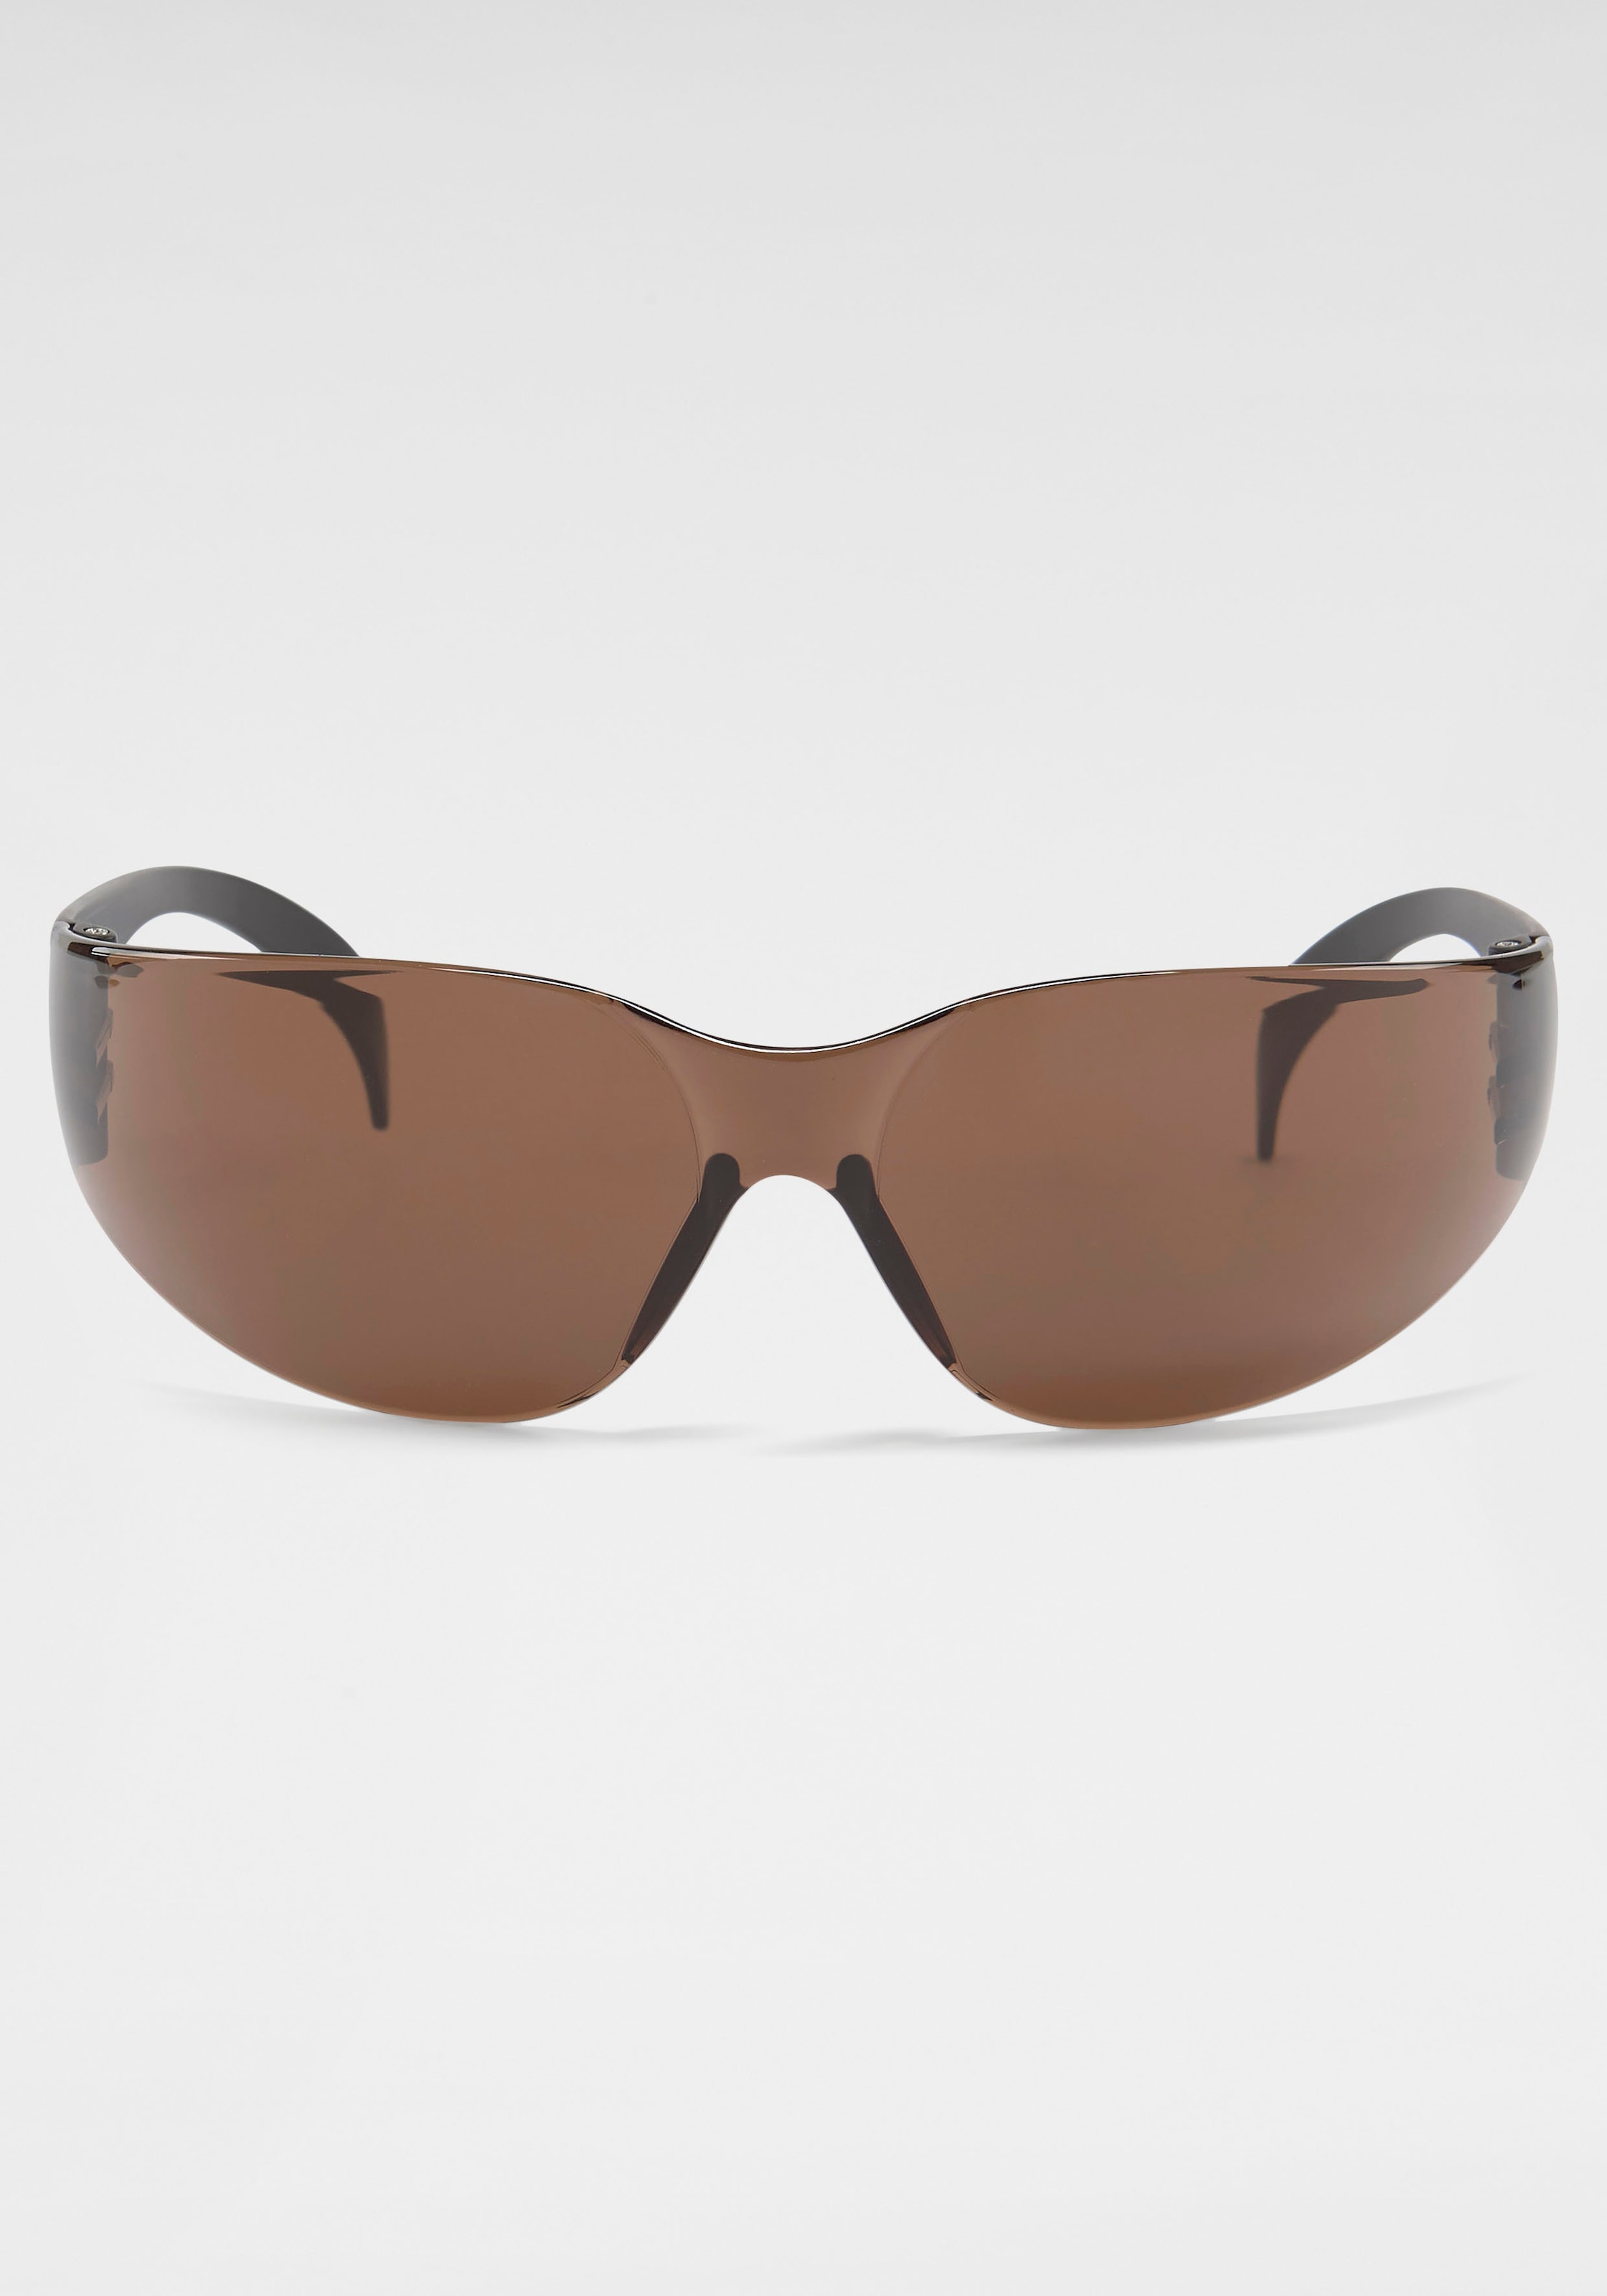 BACK IN BLACK Eyewear Sonnenbrille, Randlos kaufen